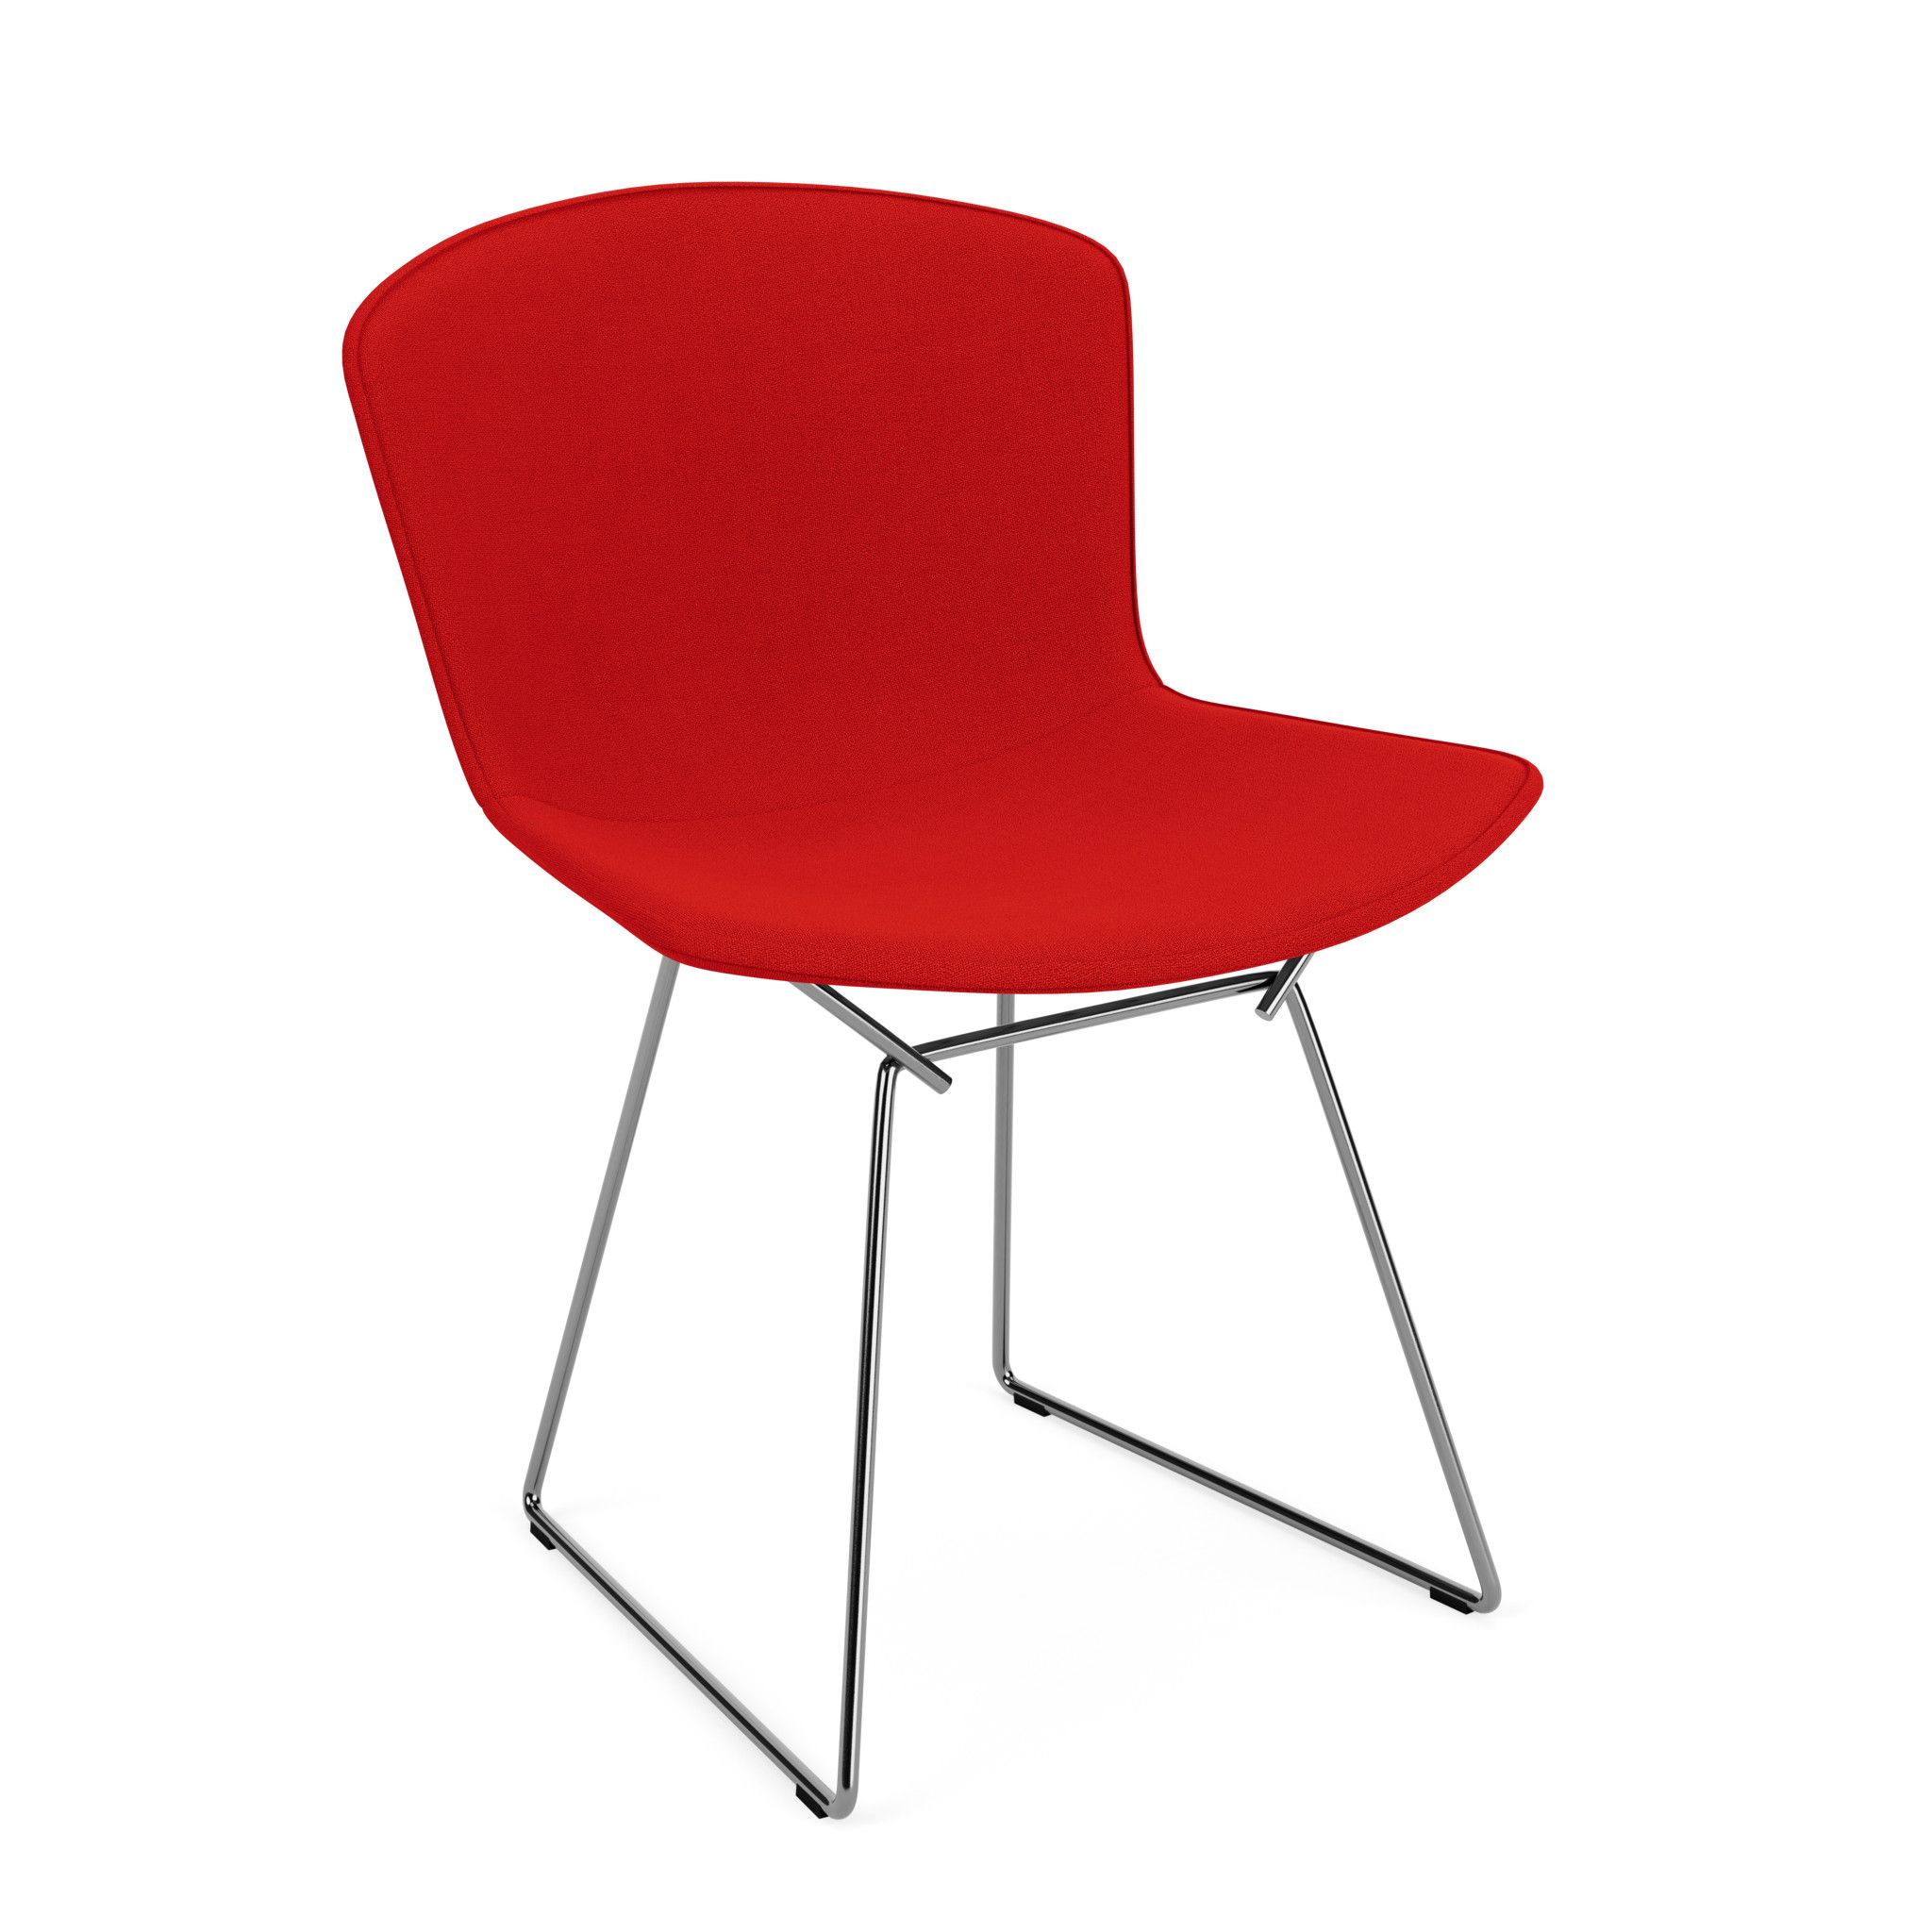 https://selig-wohndesign.de/31367/knoll-international-bertoia-side-chair-vollpolster.jpg